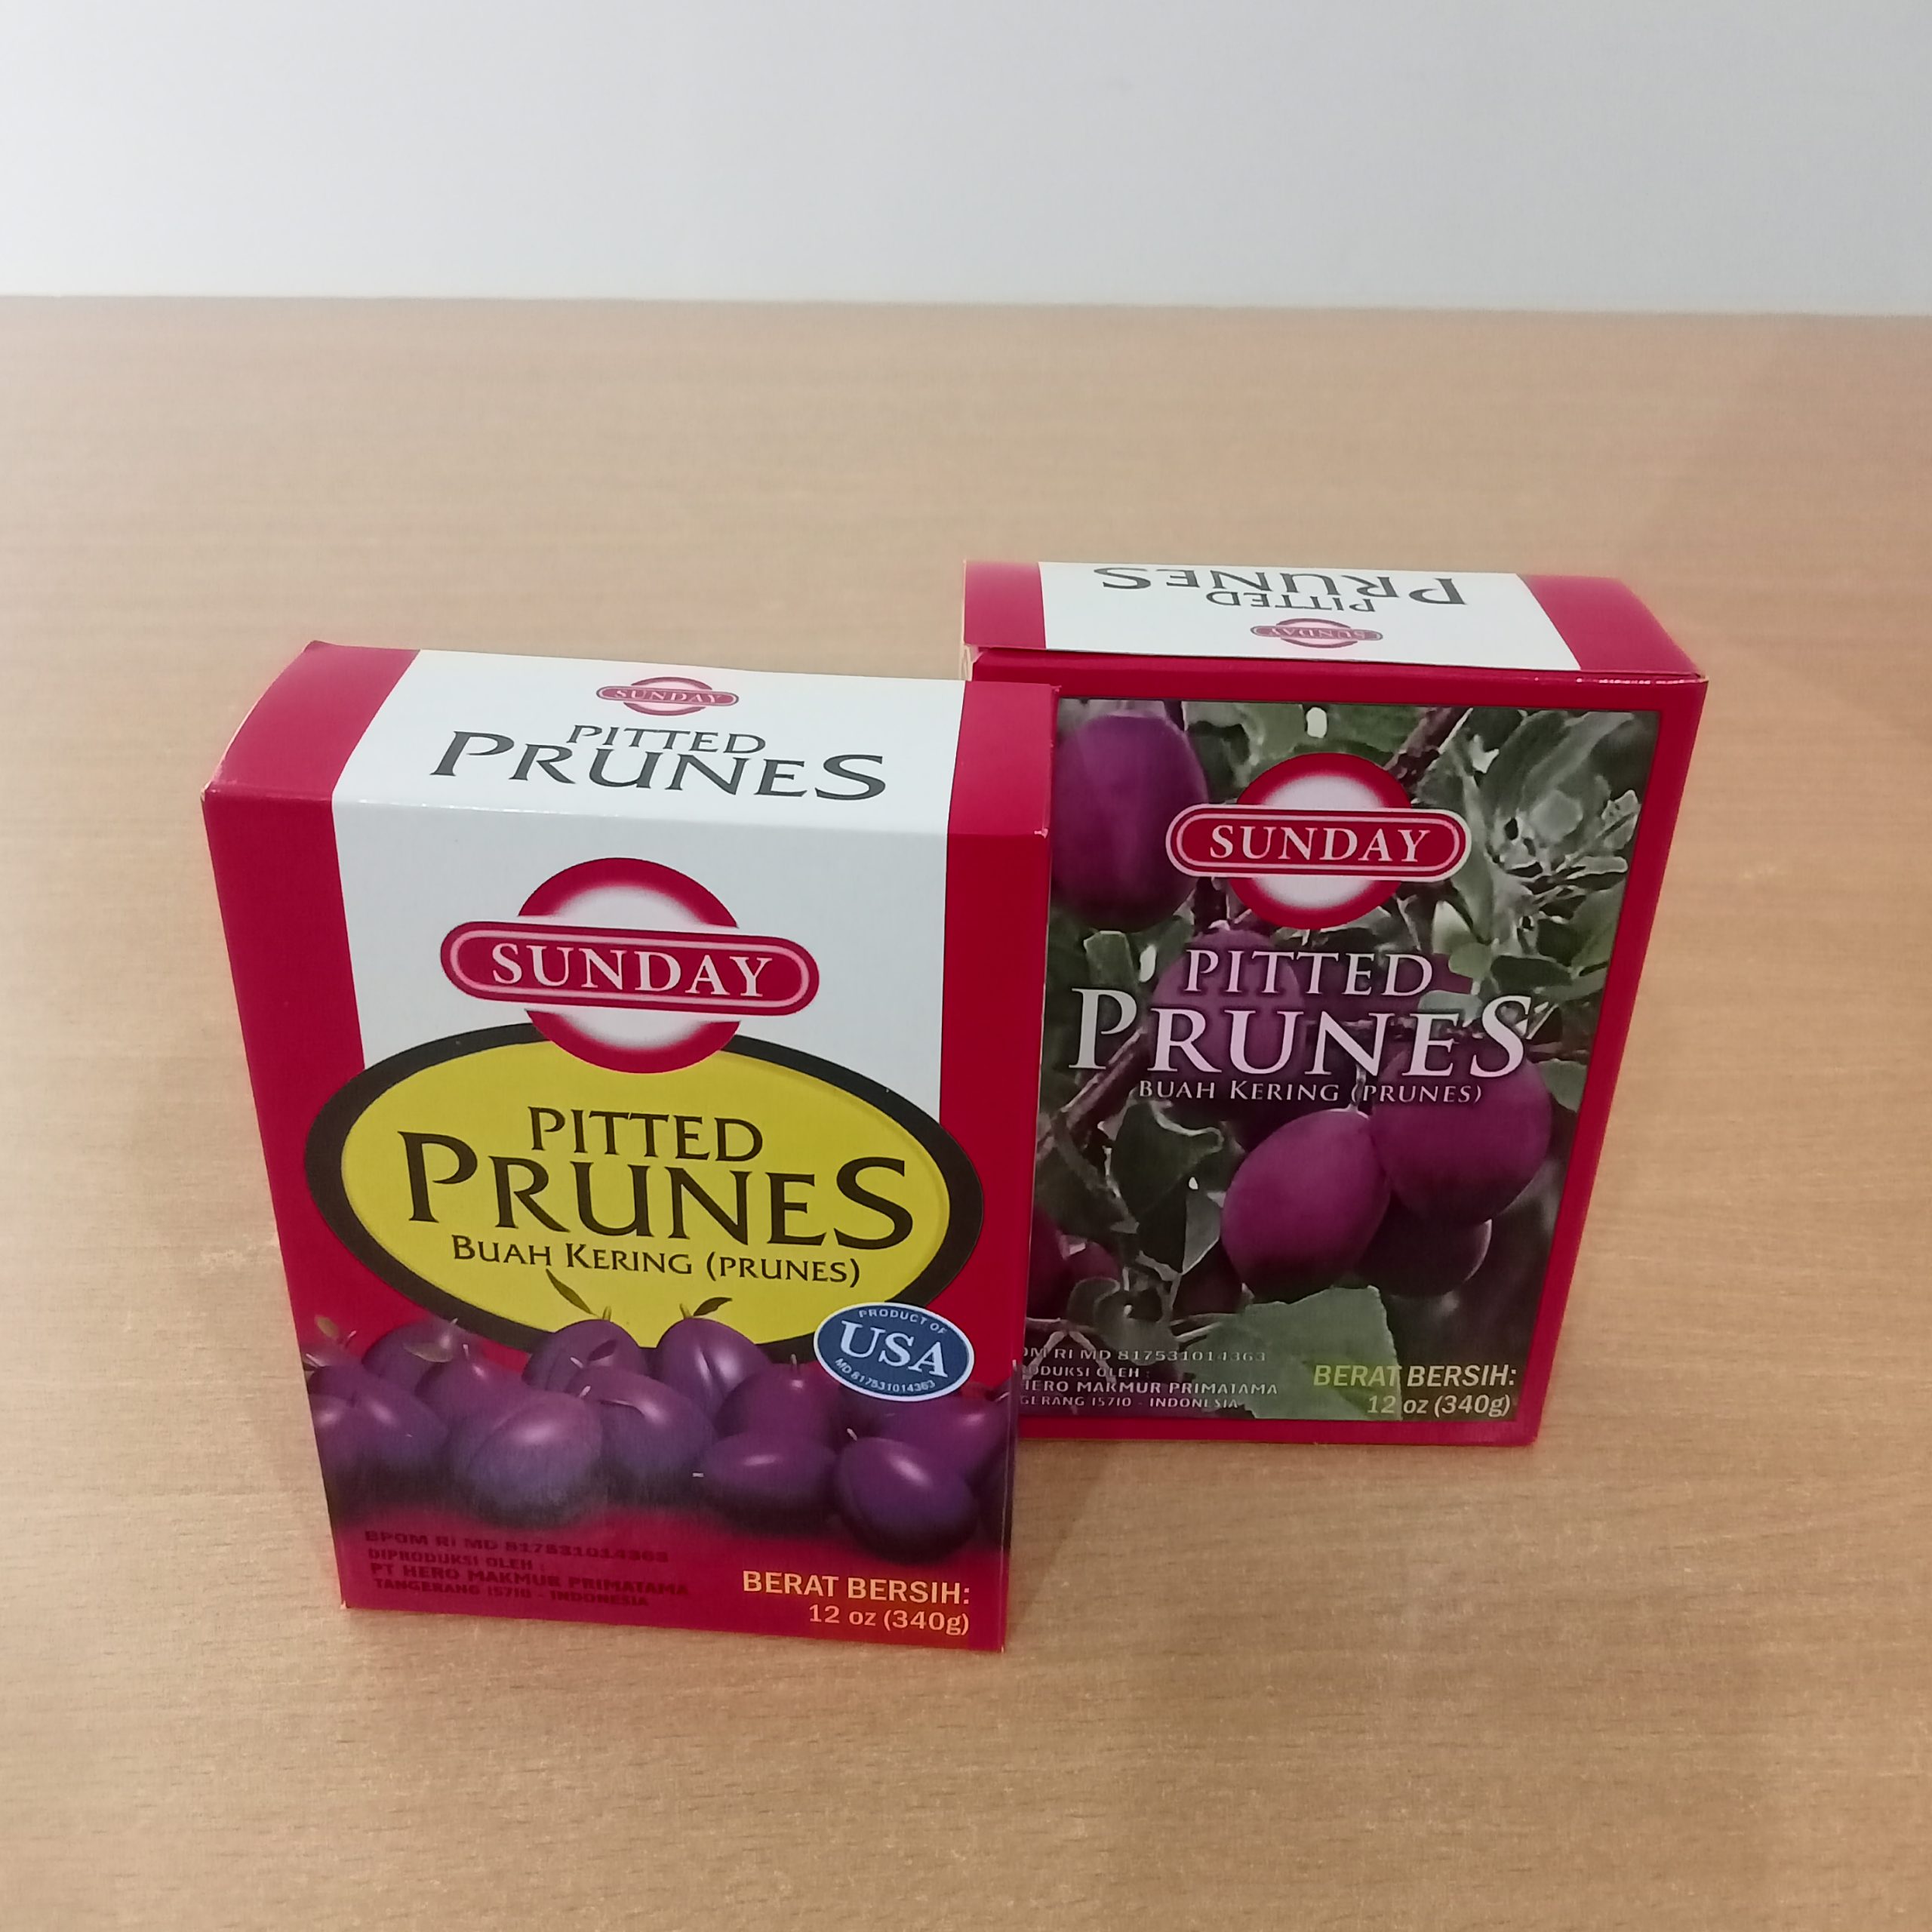 Sunday Prunes 340 gr pitted prune Sunday Buah kering prunes (6)